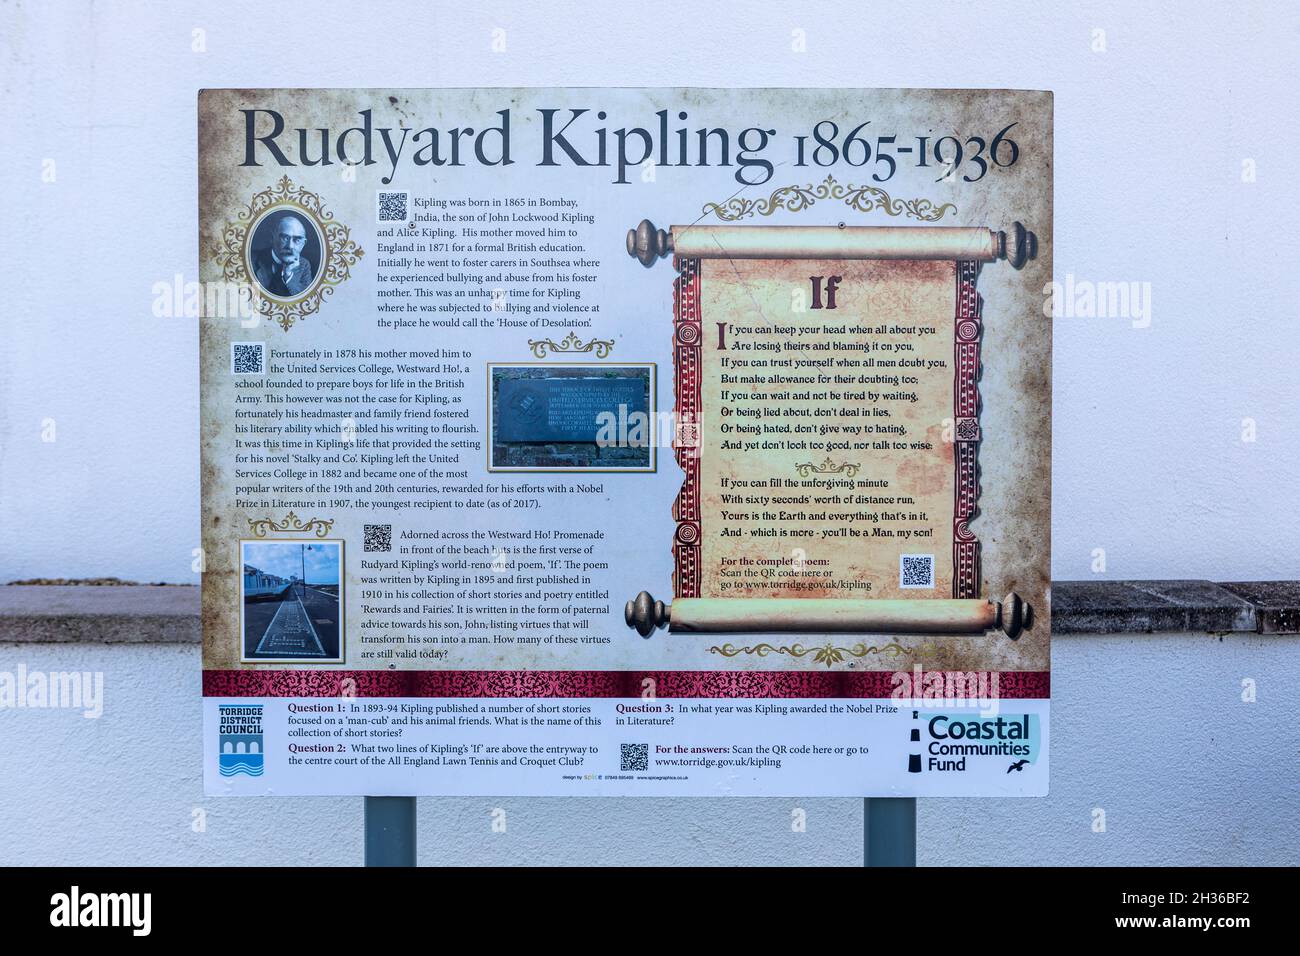 Autor Rudyard Kipling Fotos e Imágenes de stock - Alamy